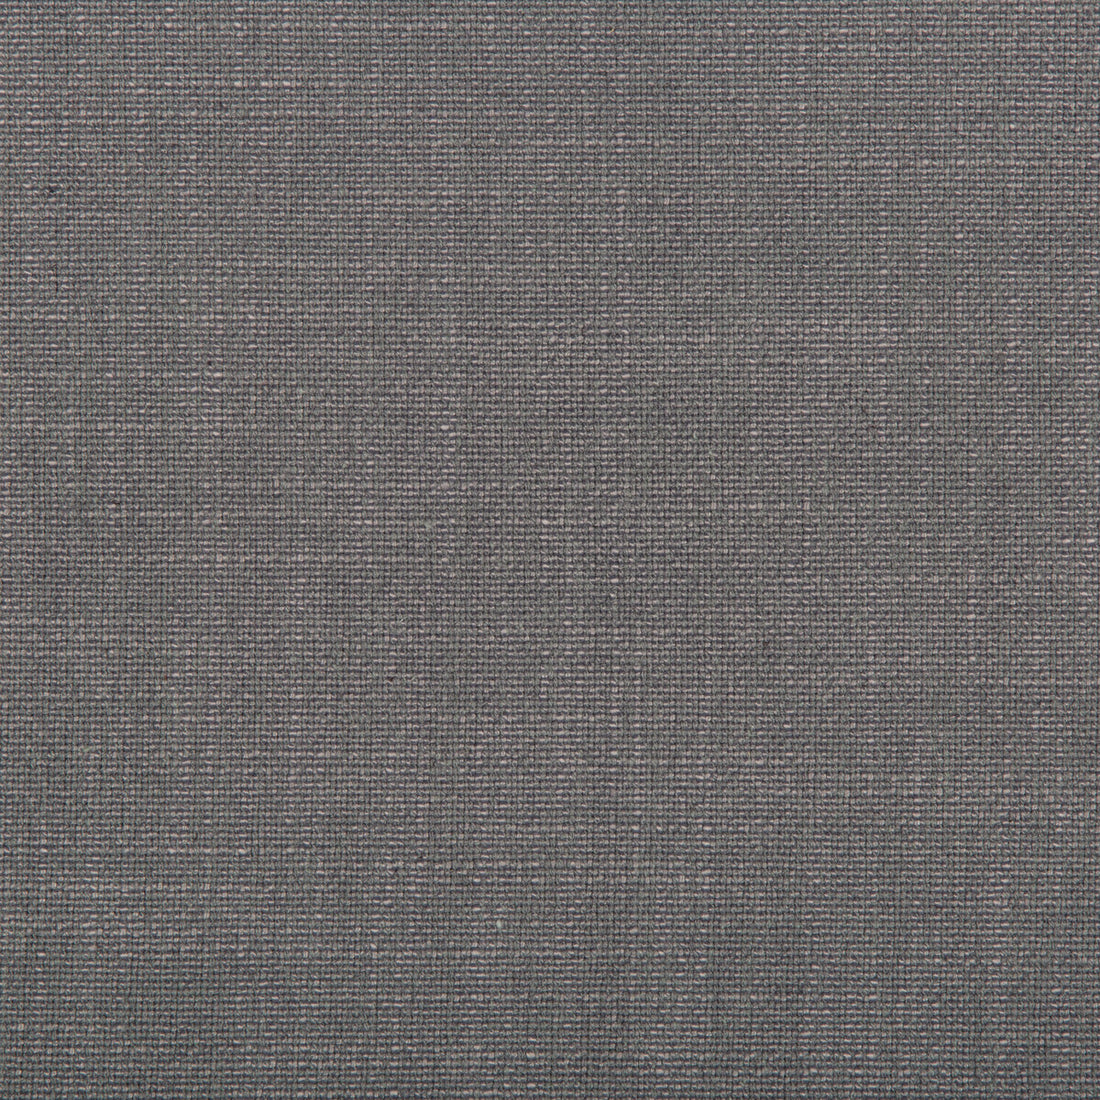 Kravet Smart fabric in 35226-121 color - pattern 35226.121.0 - by Kravet Smart in the Performance Kravetarmor collection